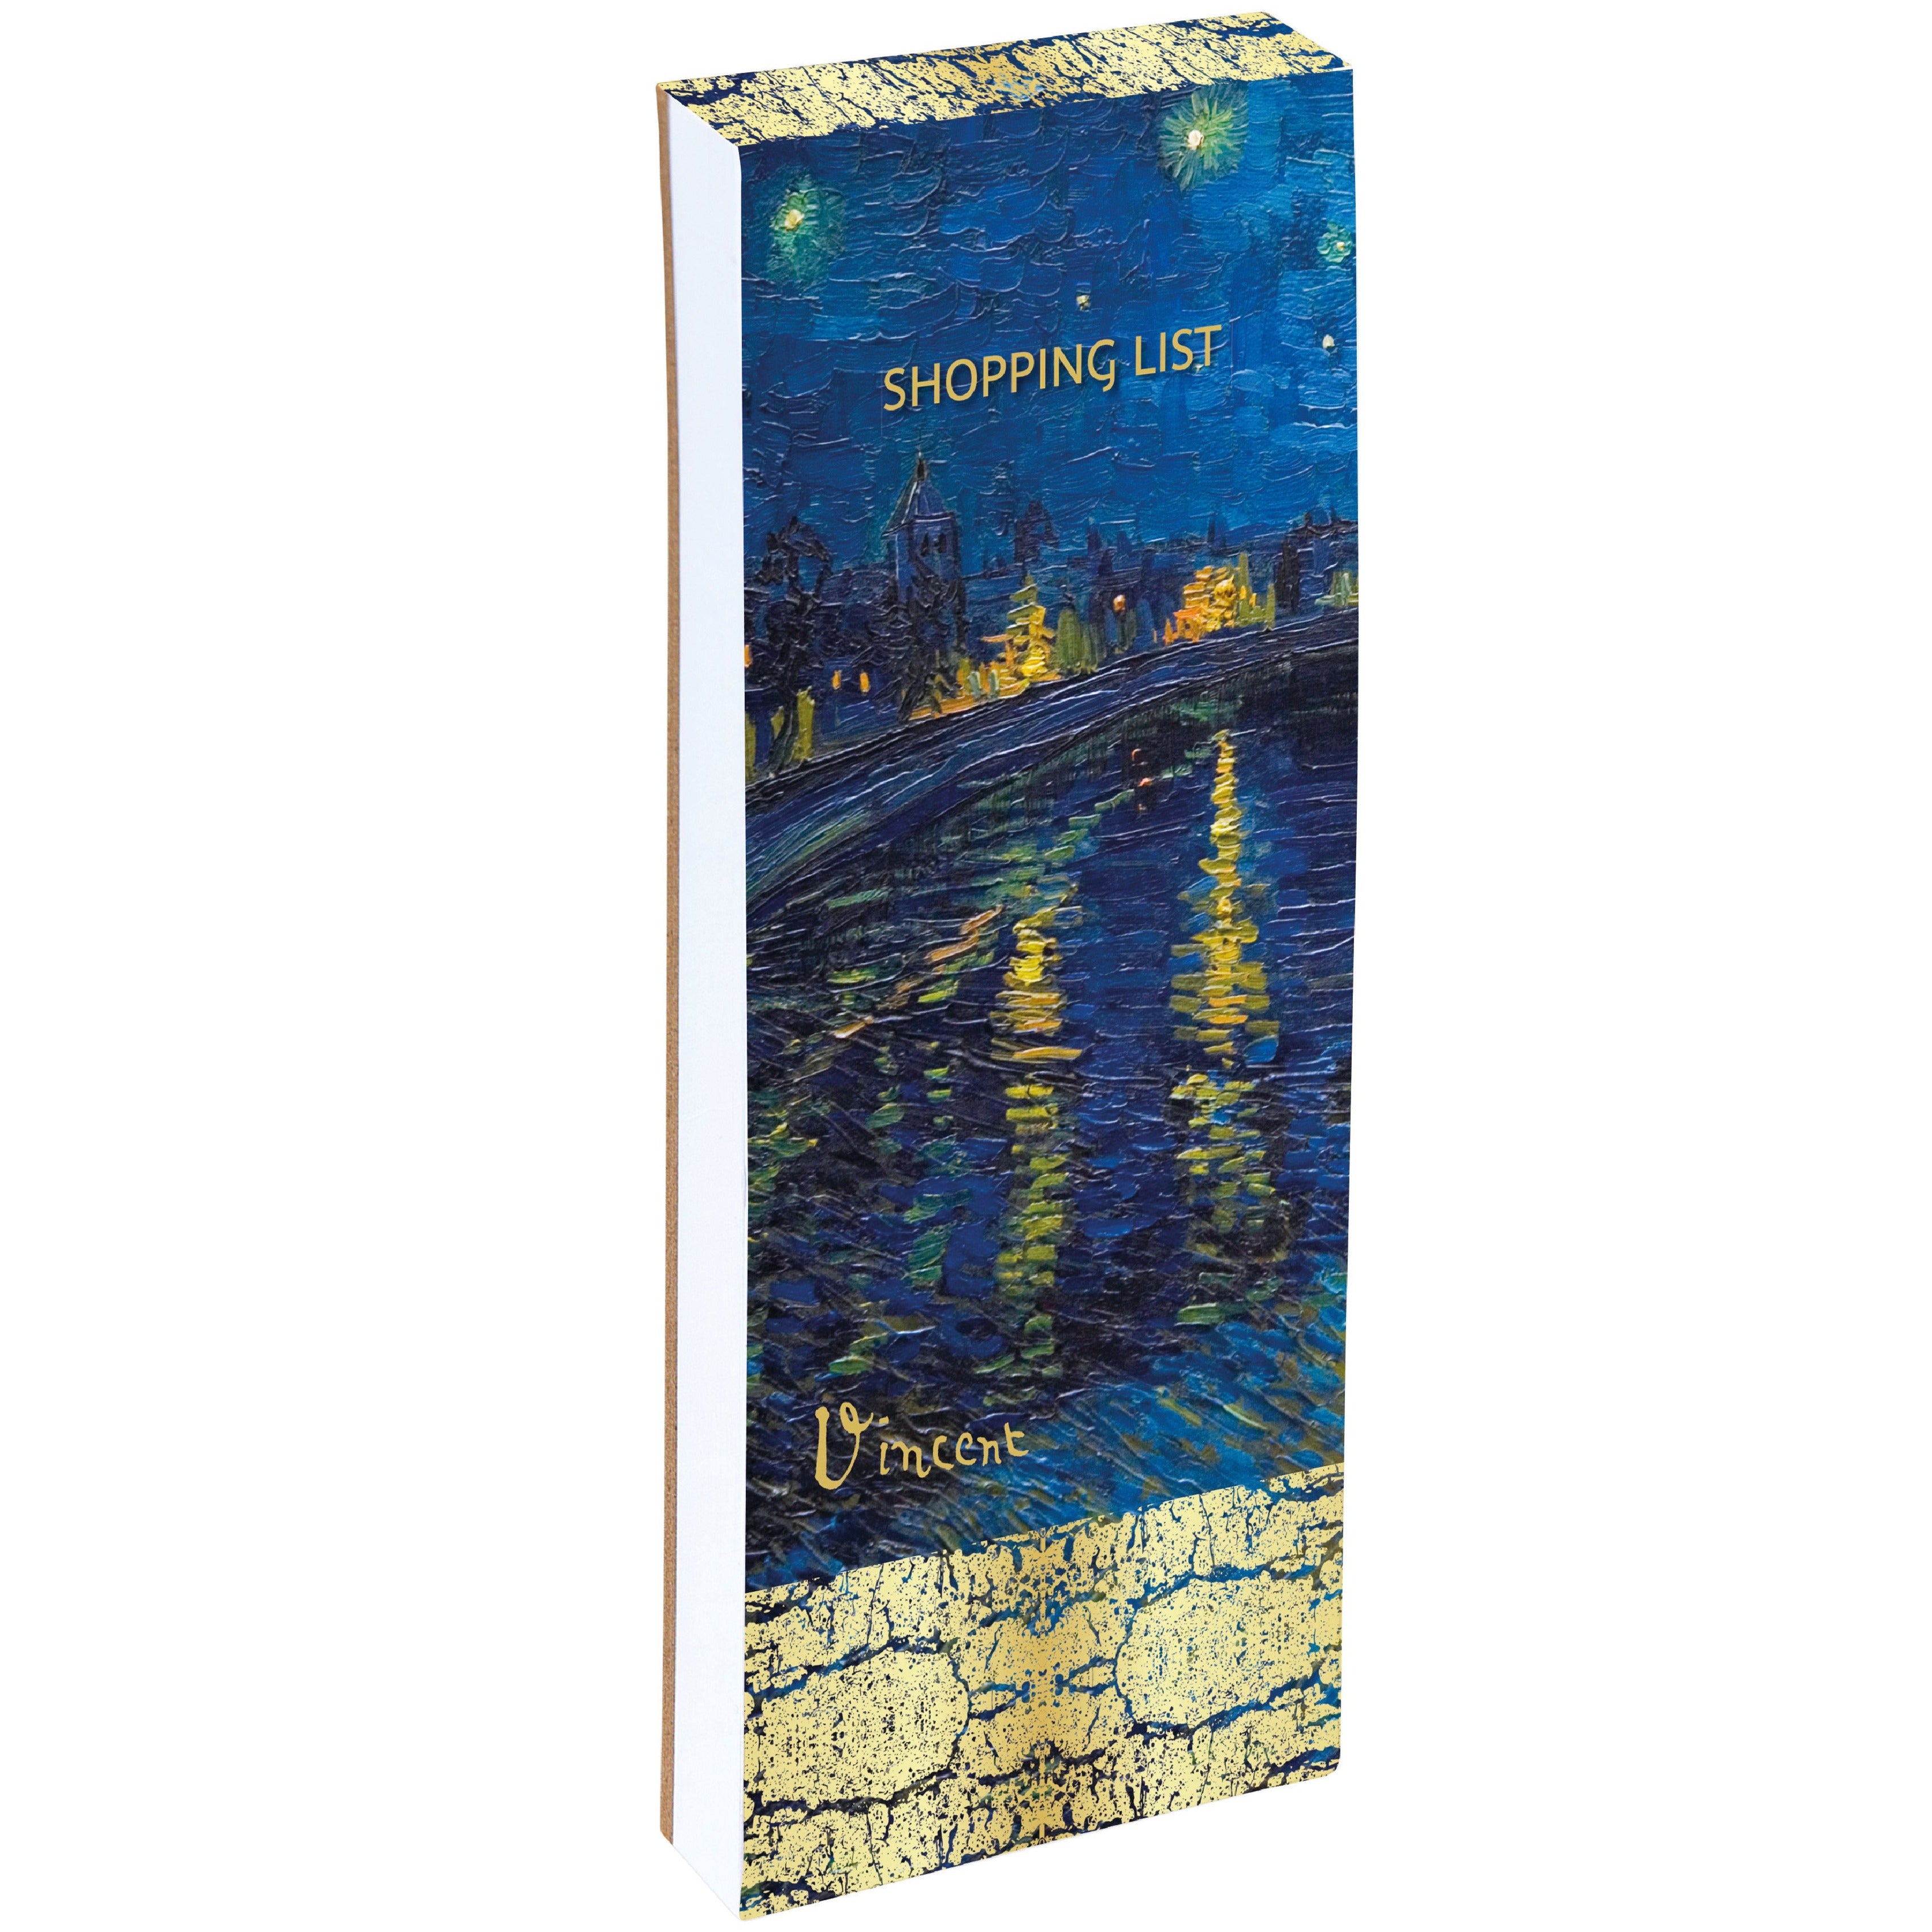 Shopping List – Van Gogh - Starry Night A